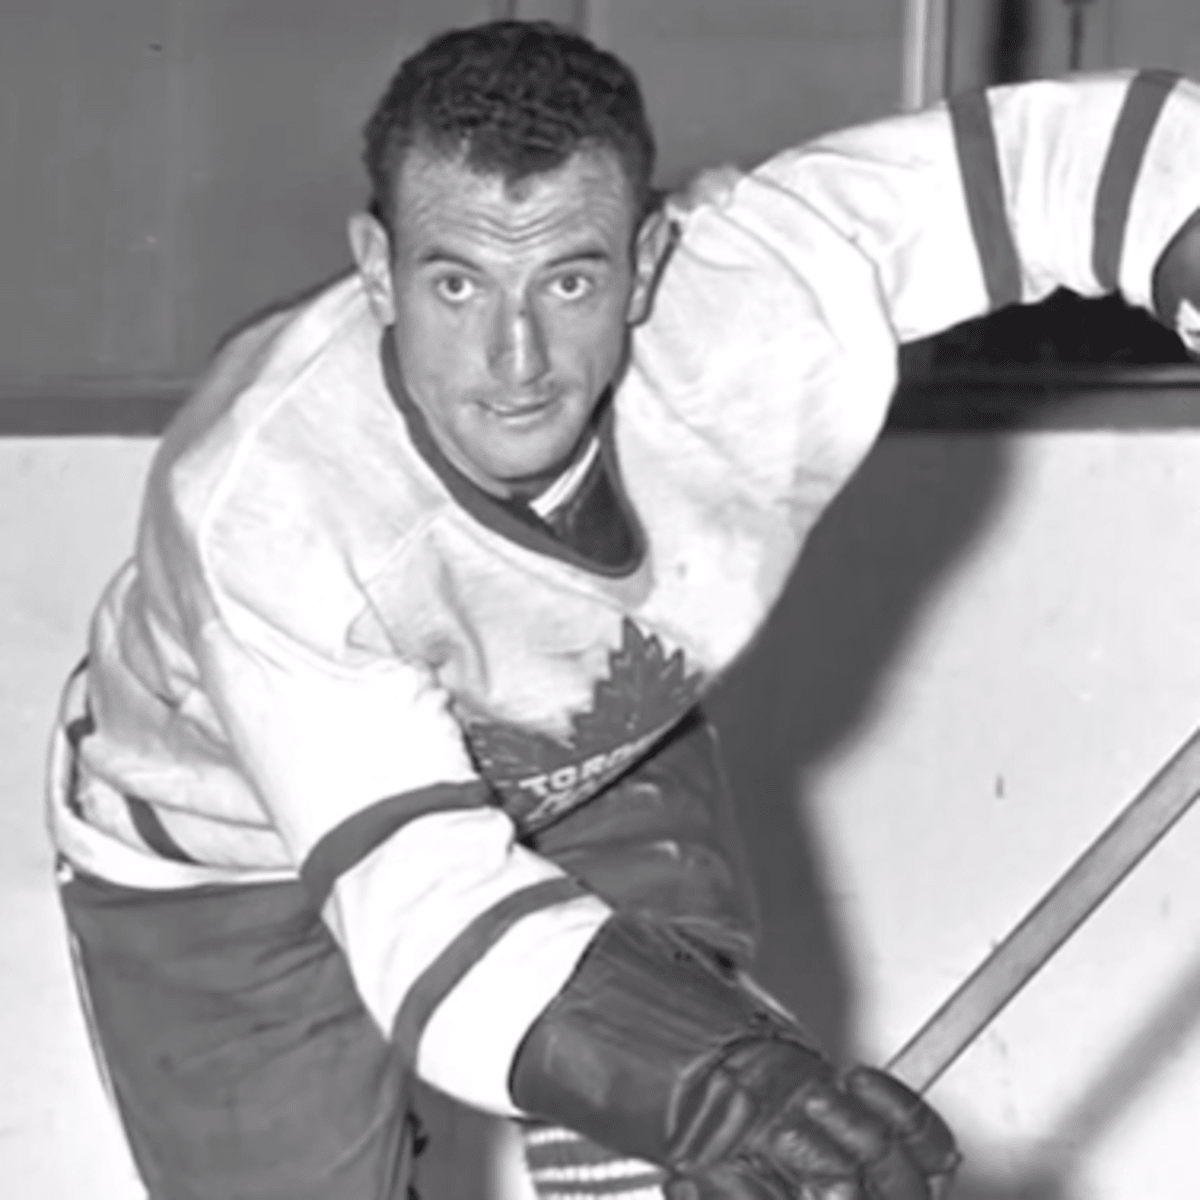 1946-47 Ted Teeder Kennedy Maple Leafs Game Worn Jersey